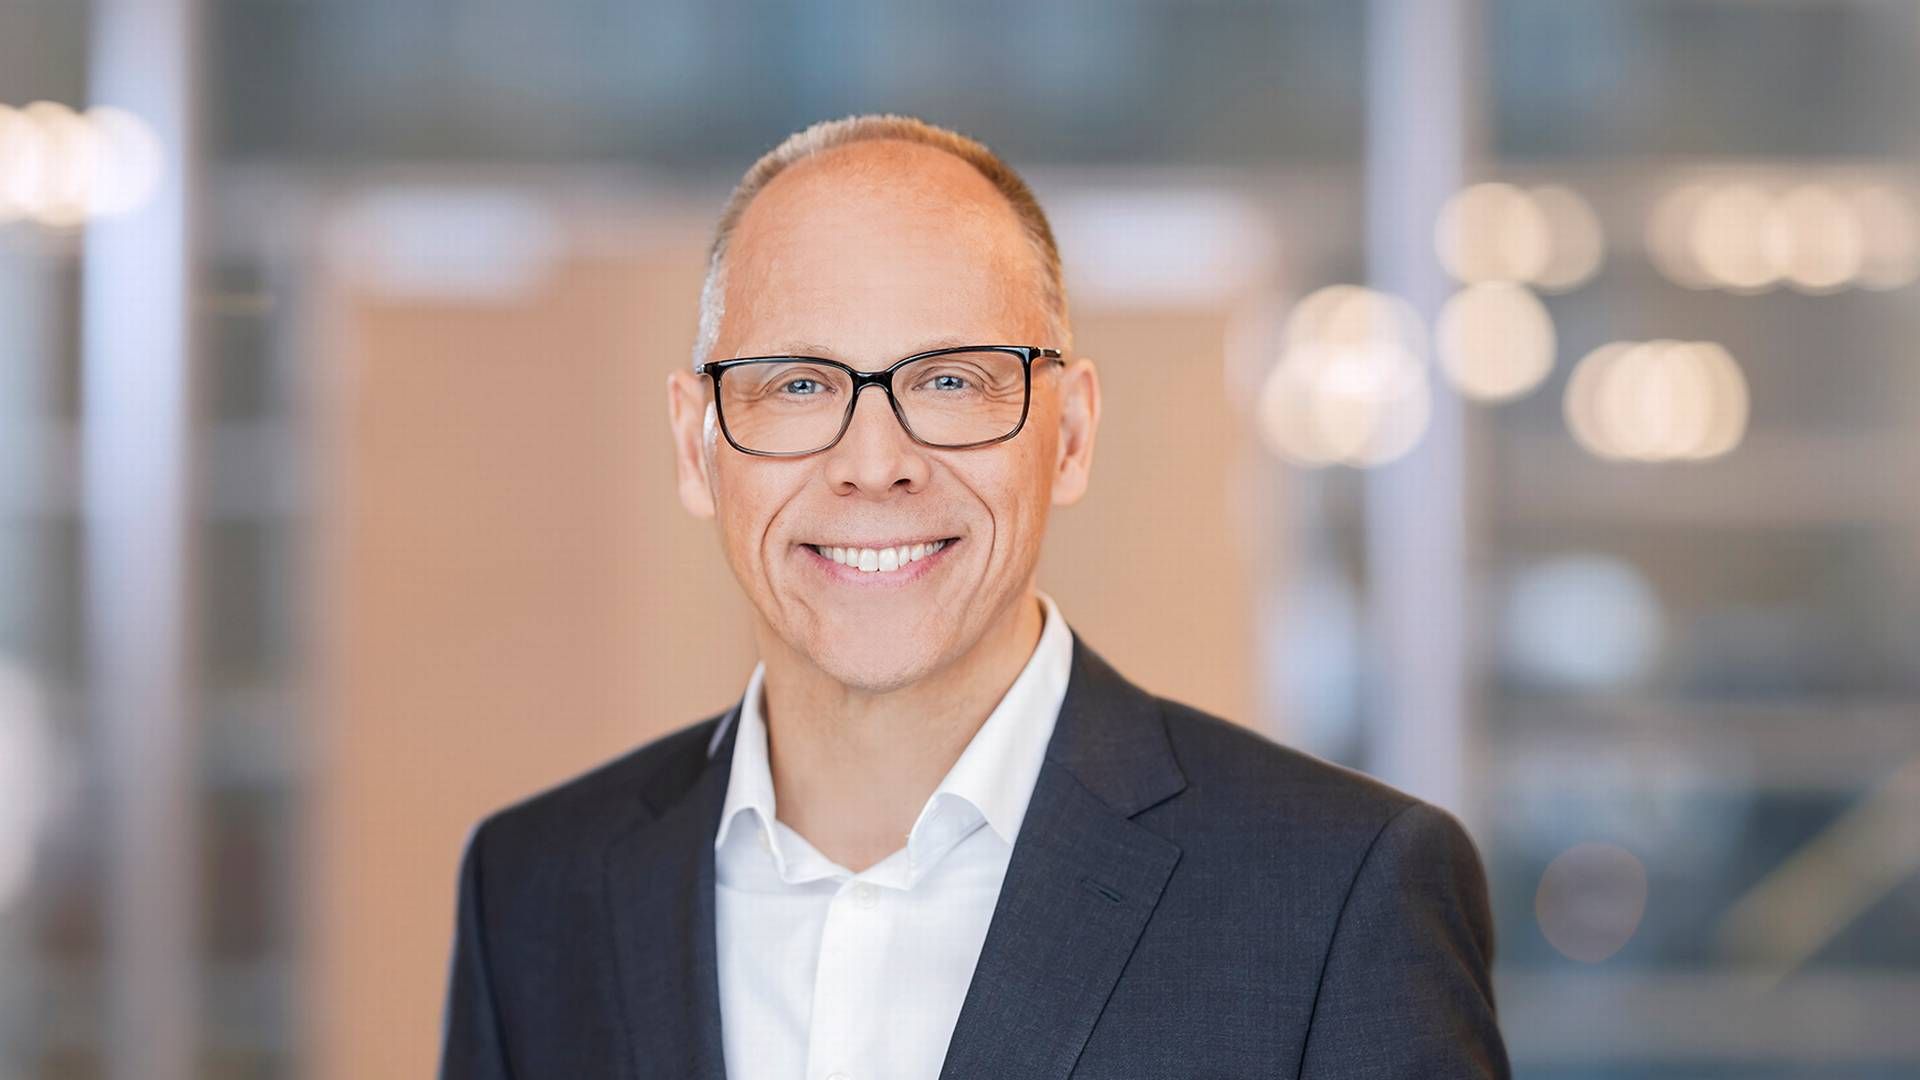 Frank Vang-Jensen, President and Group CEO of Nordea. | Photo: Nordea PR.